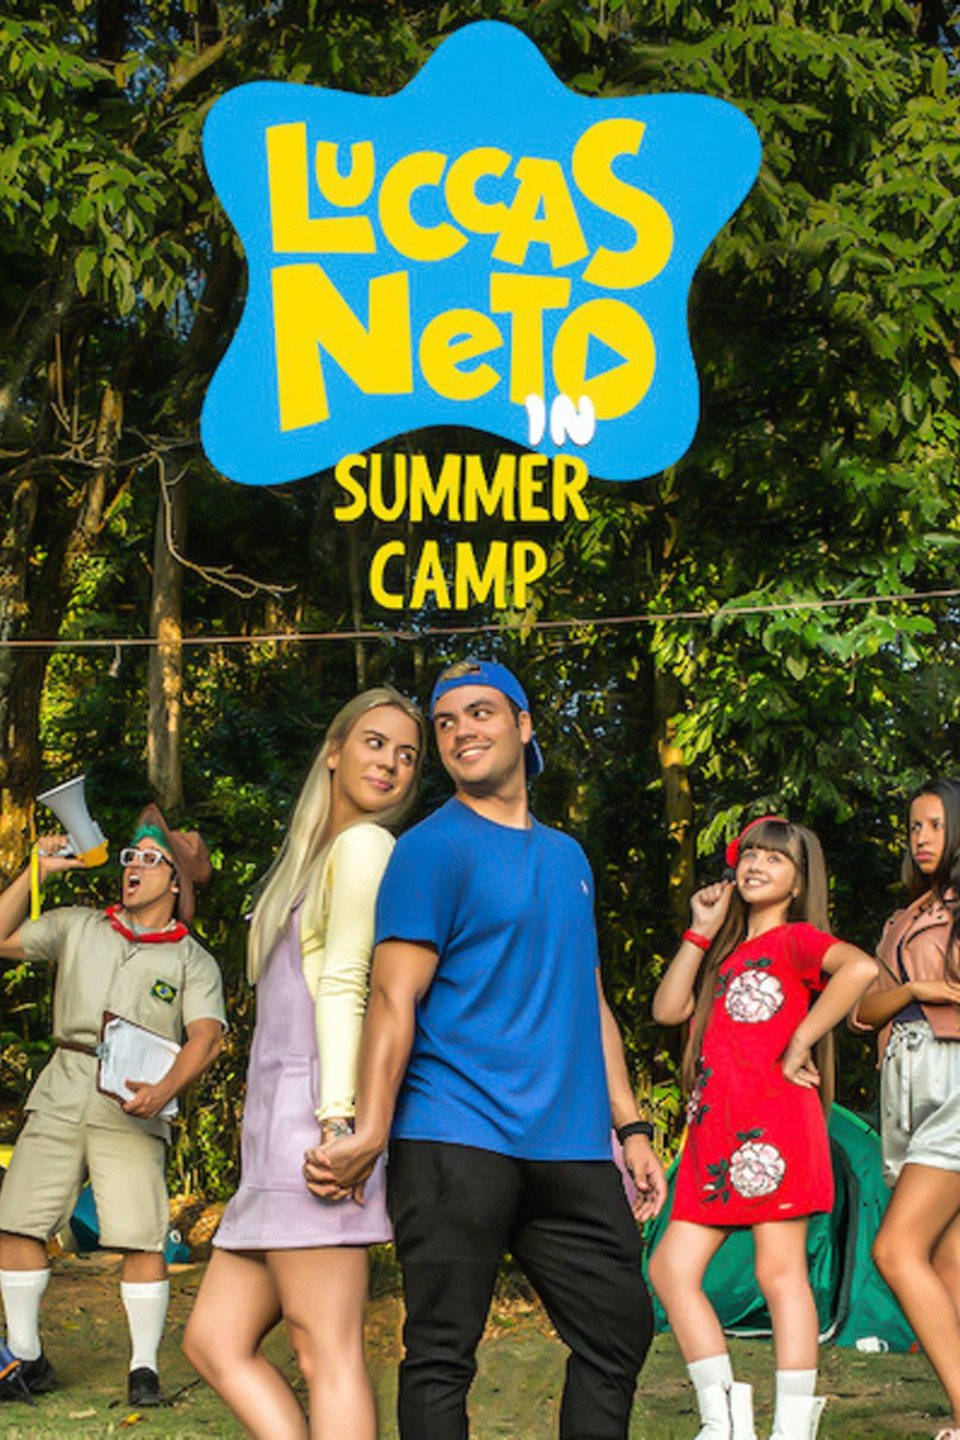 Luccas Neto Summer Camp Wallpaper